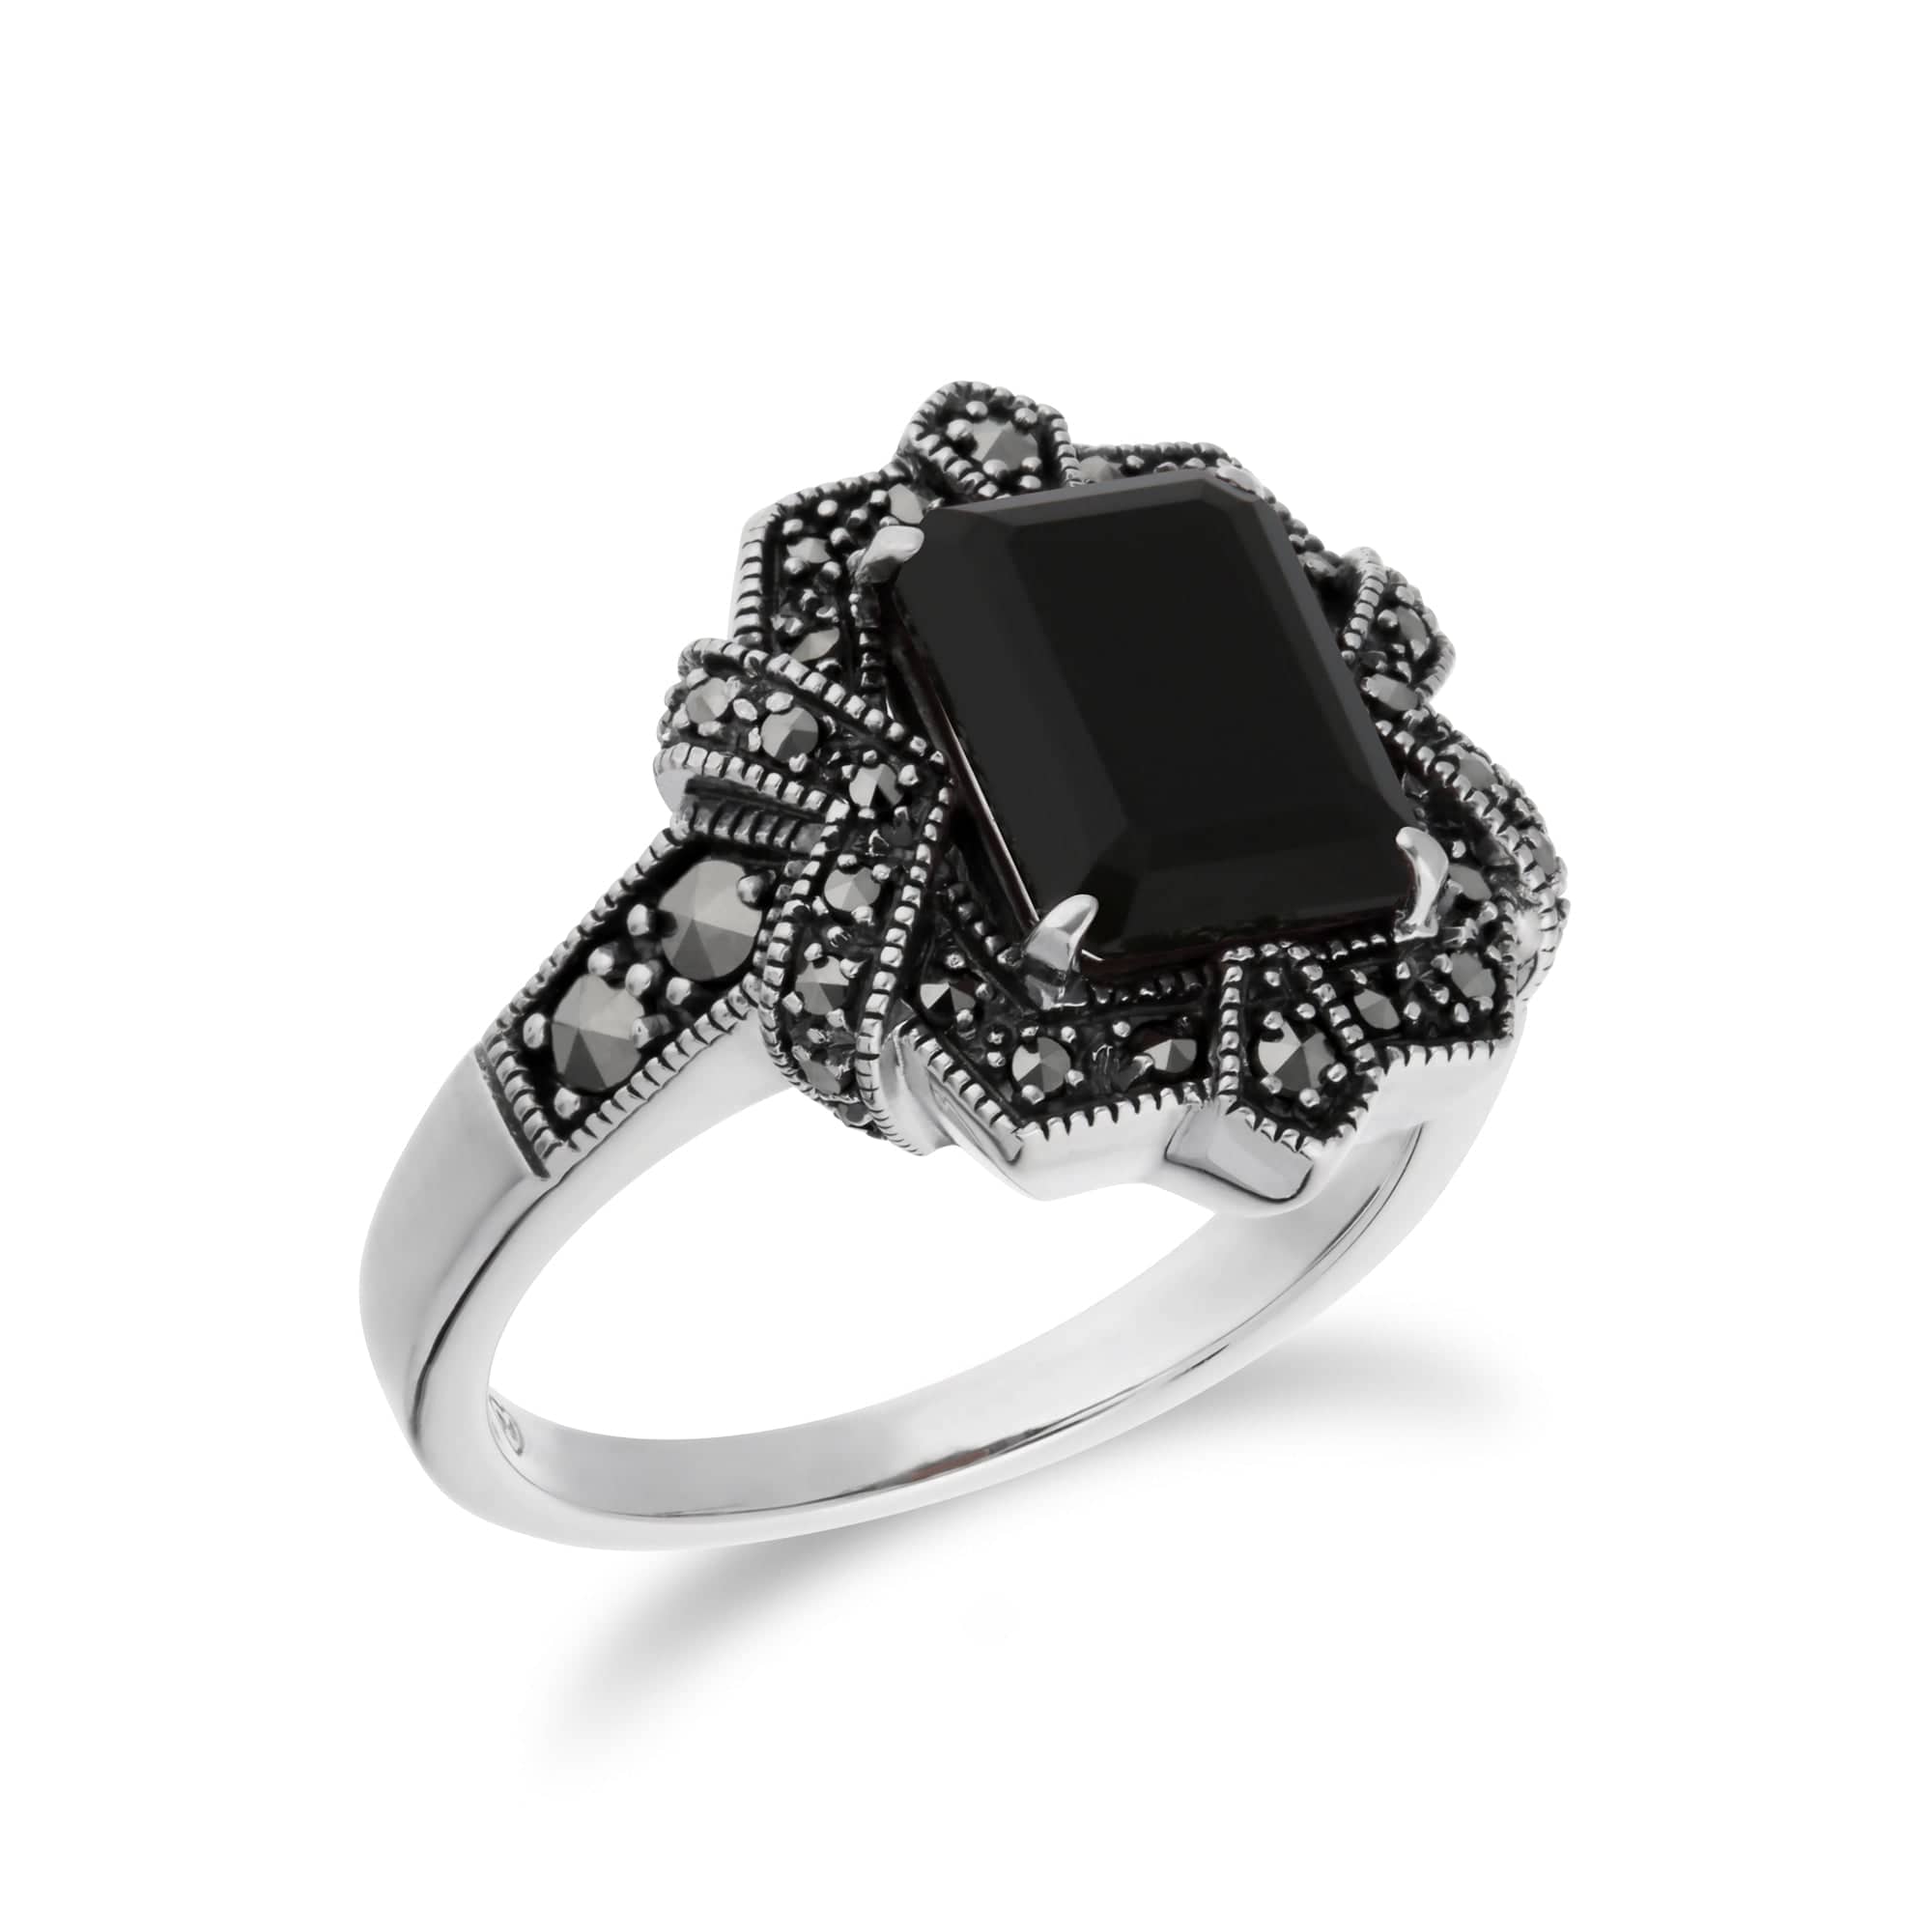 Art Deco Style Baguette Black Onyx & Marcasite Ring in 925 Sterling Silver - Gemondo